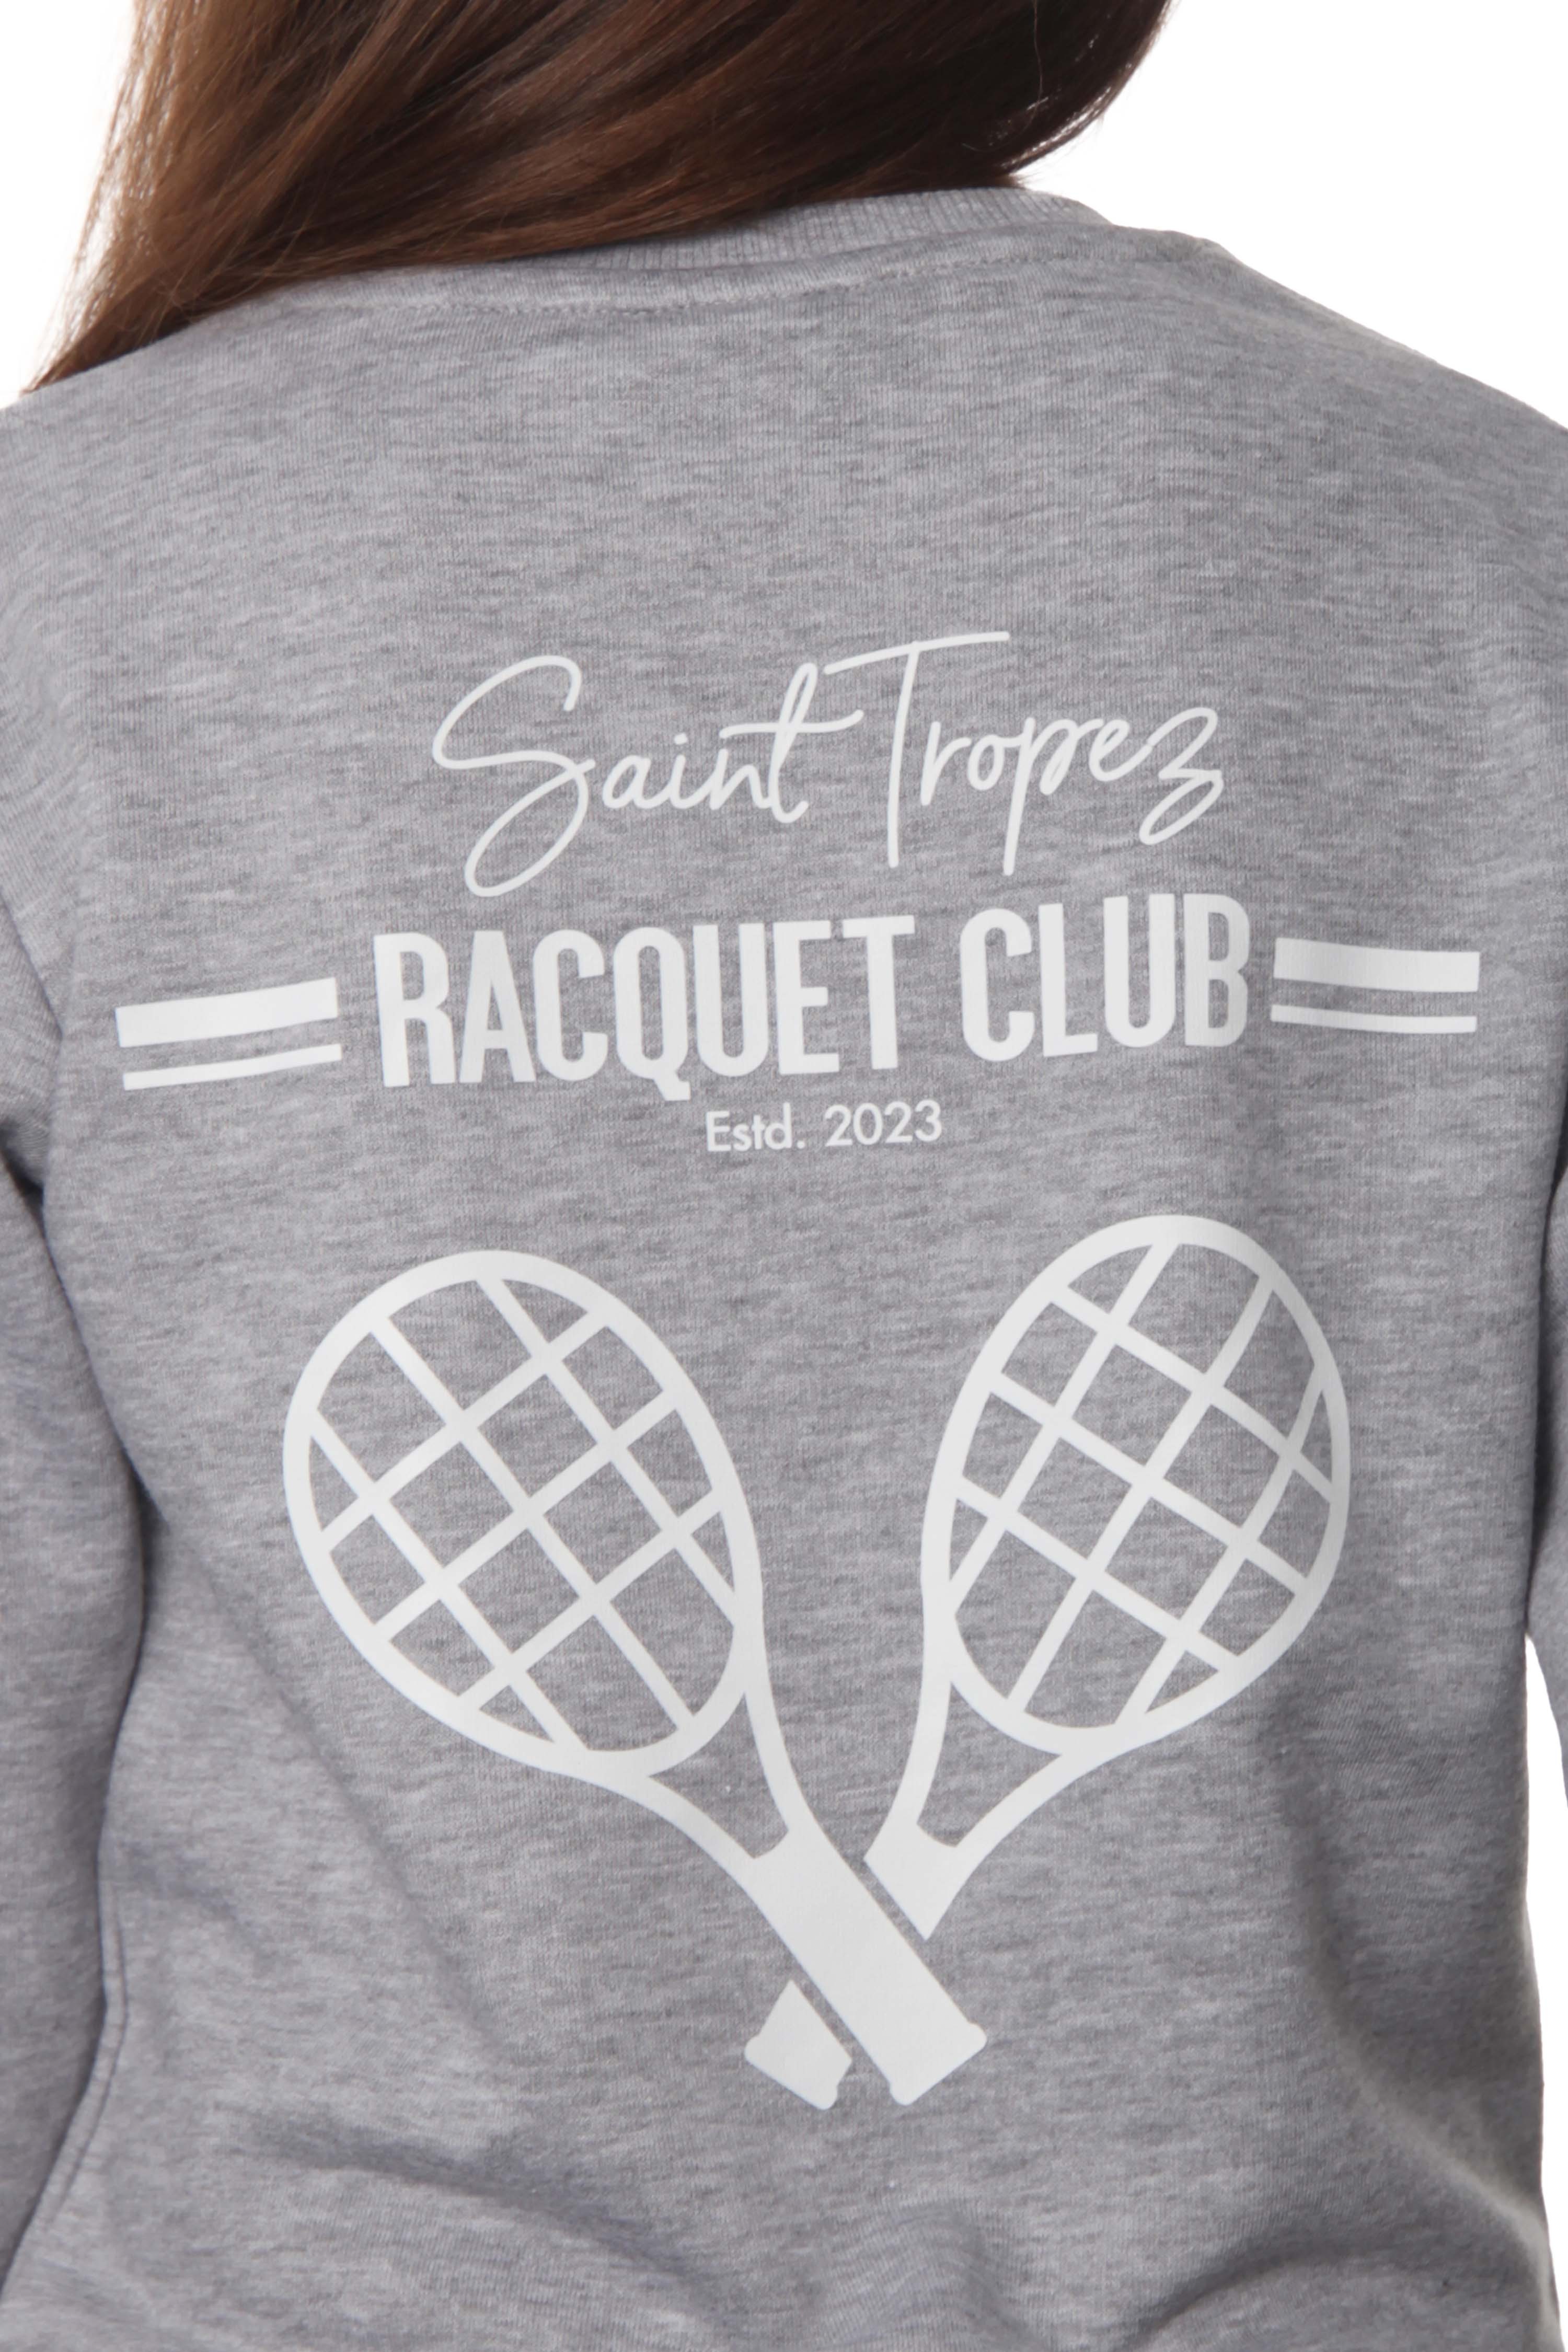 Racquet Club Sweatshirt Çocuk Kız - Gri